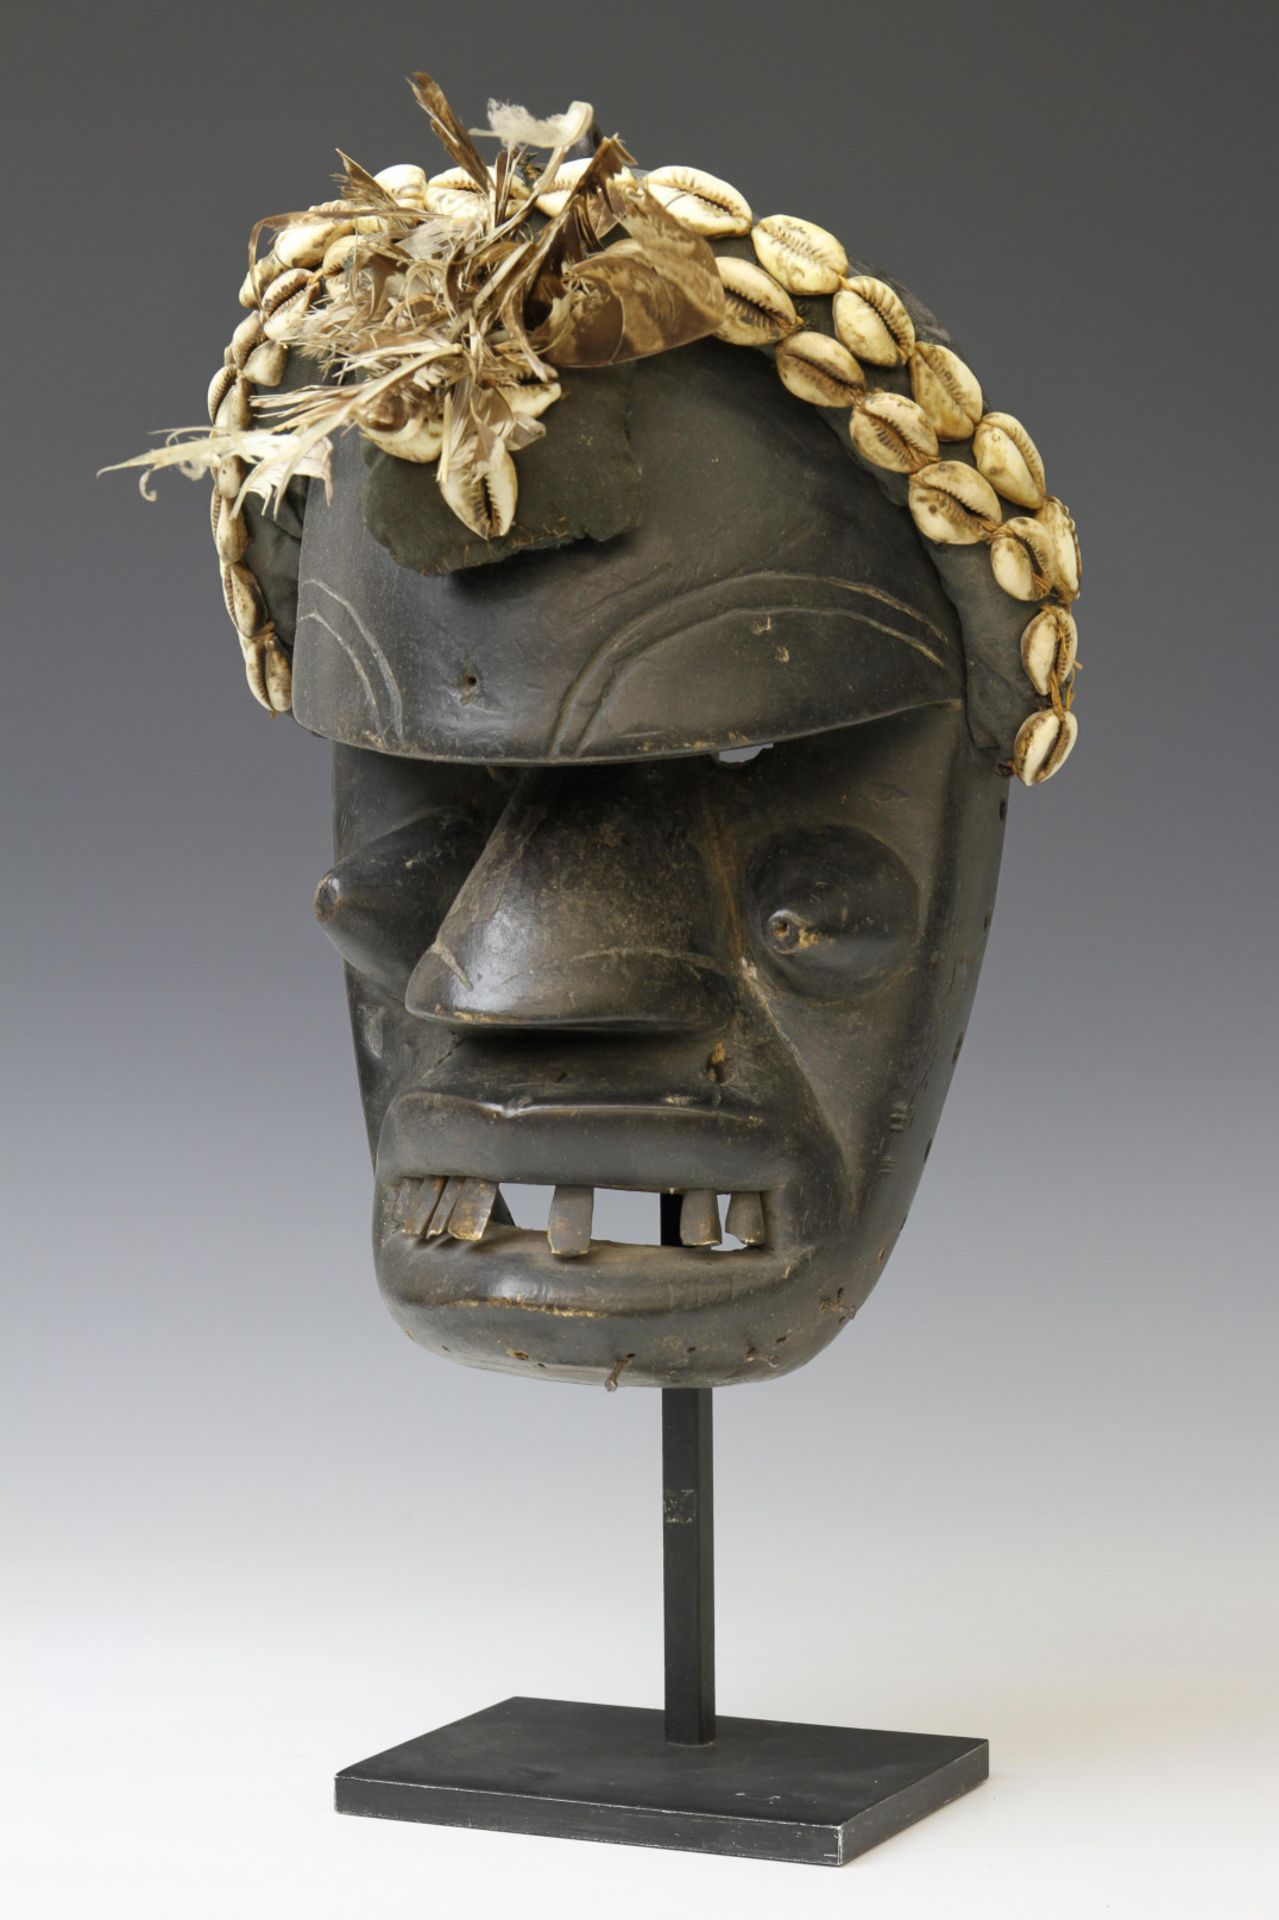 Ivory Coast, an style Dan mask - Image 2 of 3